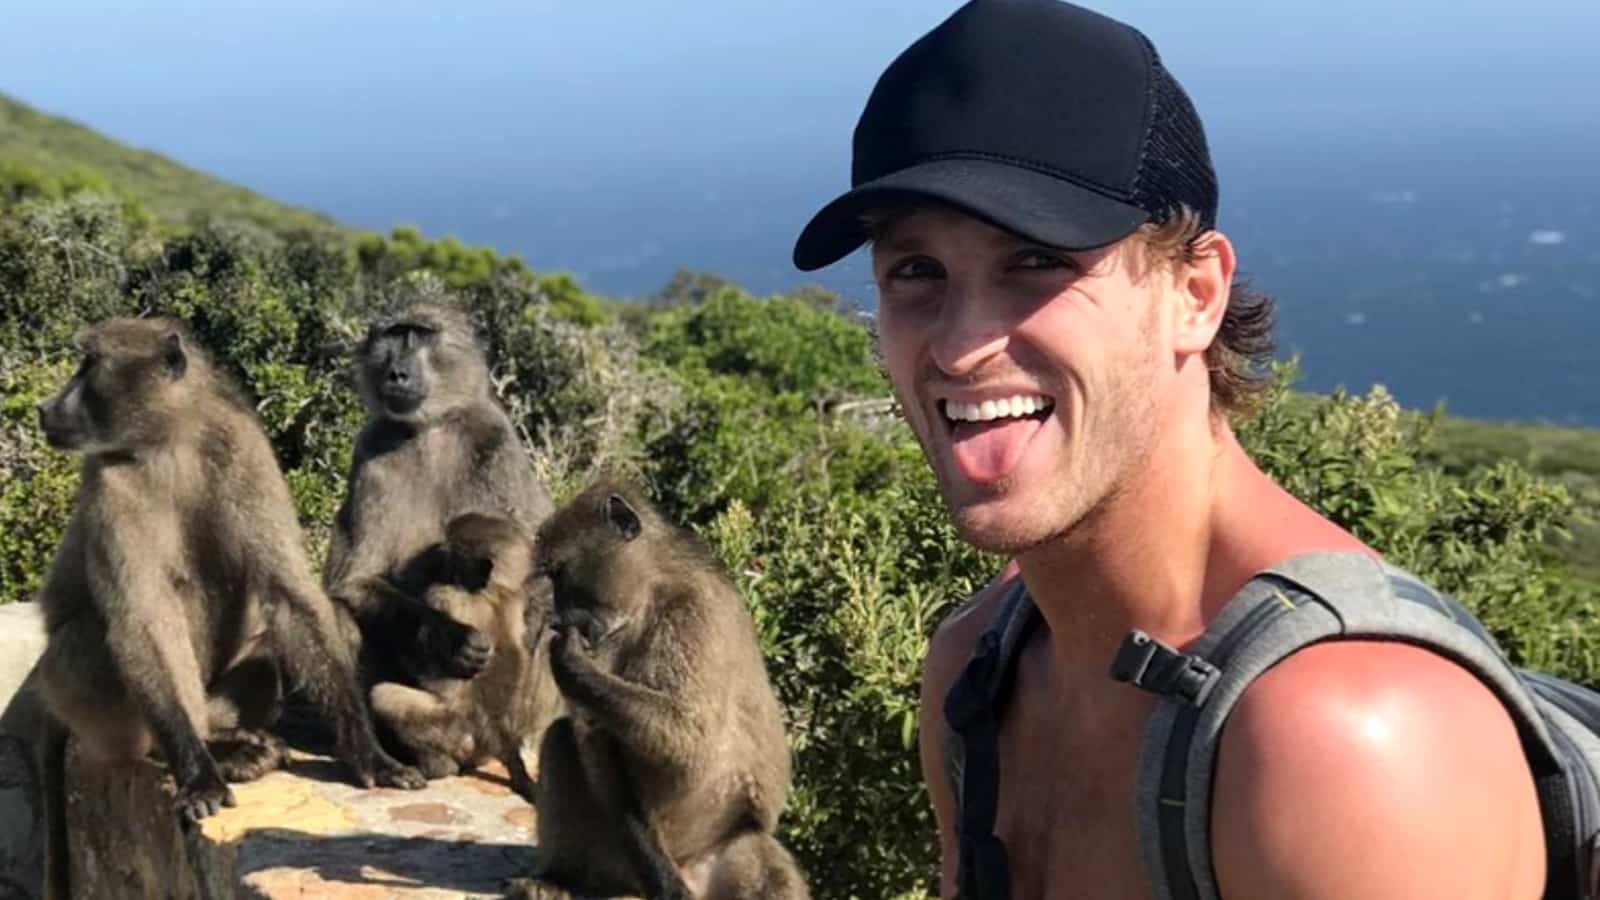 Logan Paul next to some monkeys